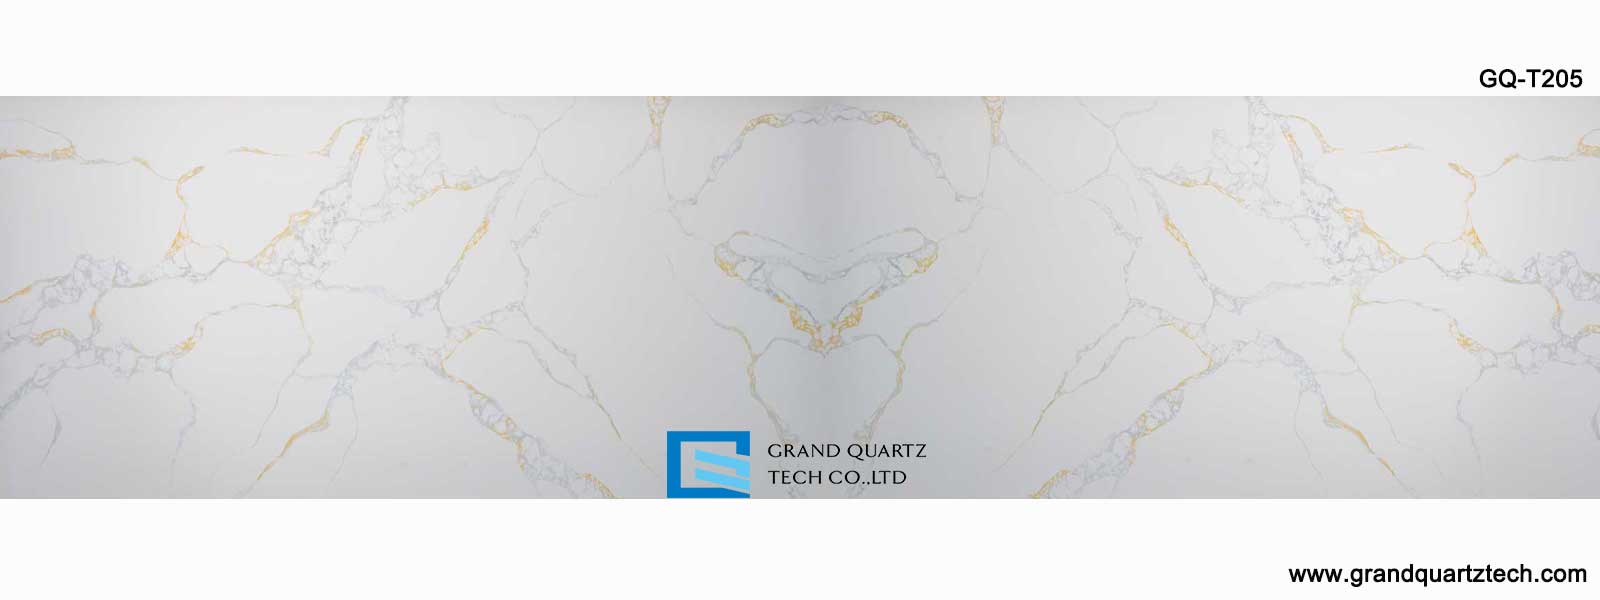 GQ-T205-symmetrical-quartz.jpg 